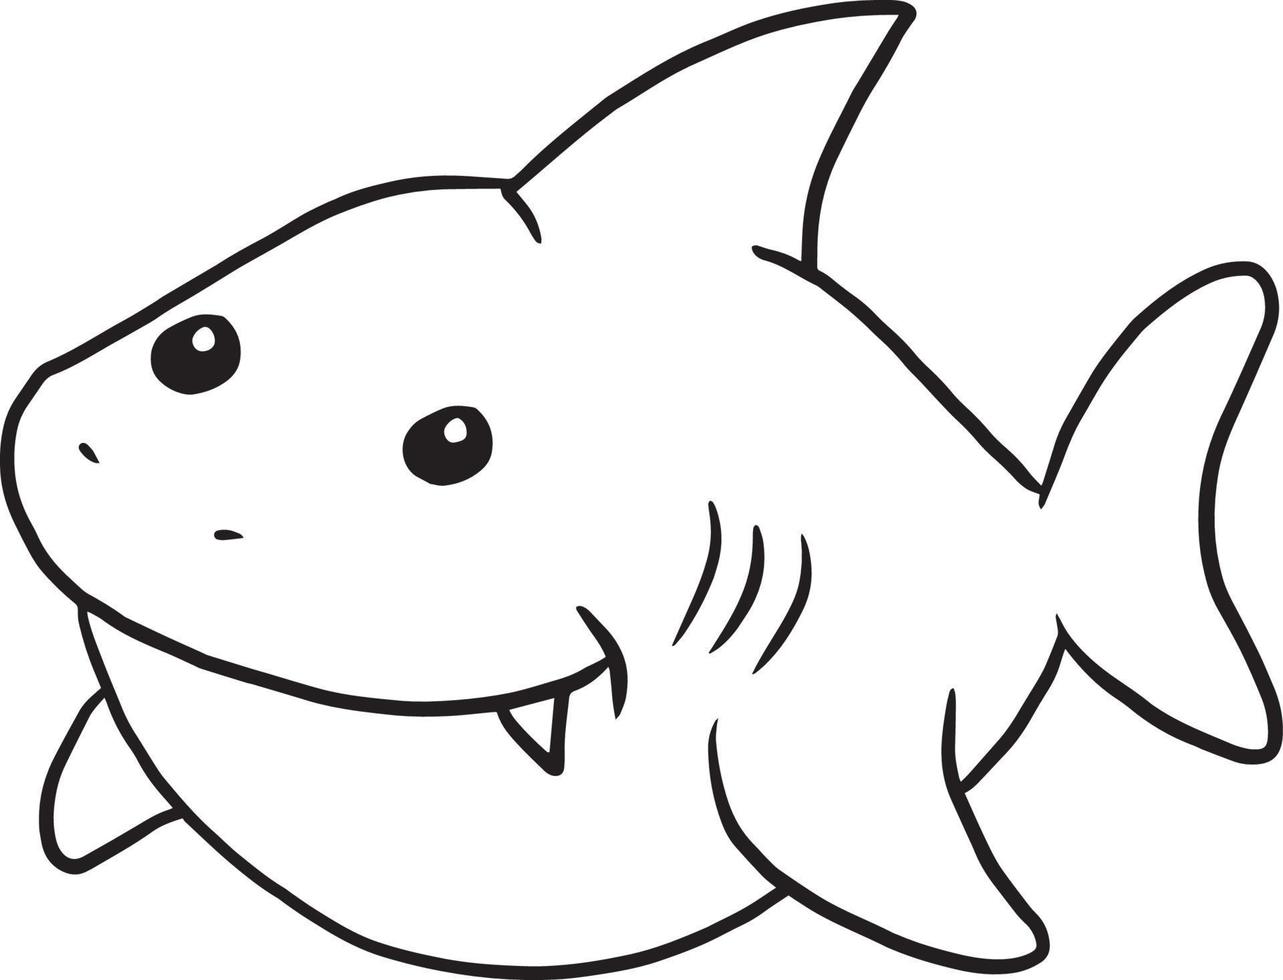 shark doodle cartoon kawaii anime cute coloring page vector